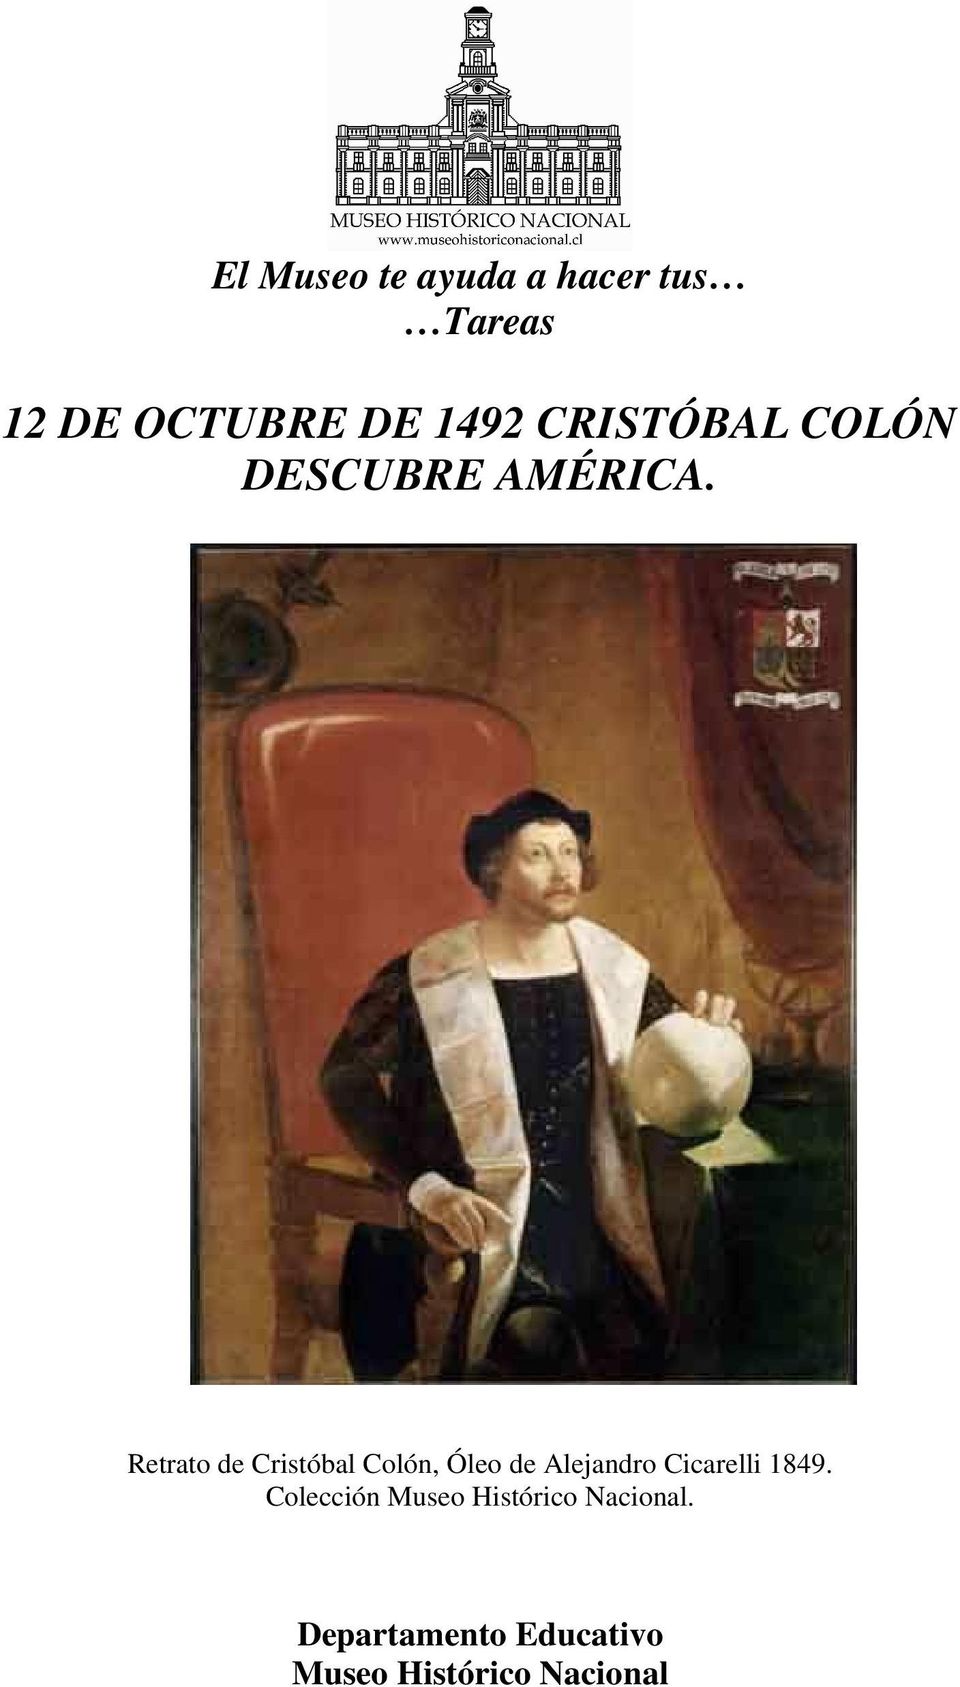 Retrato de Cristóbal Colón, Óleo de Alejandro Cicarelli